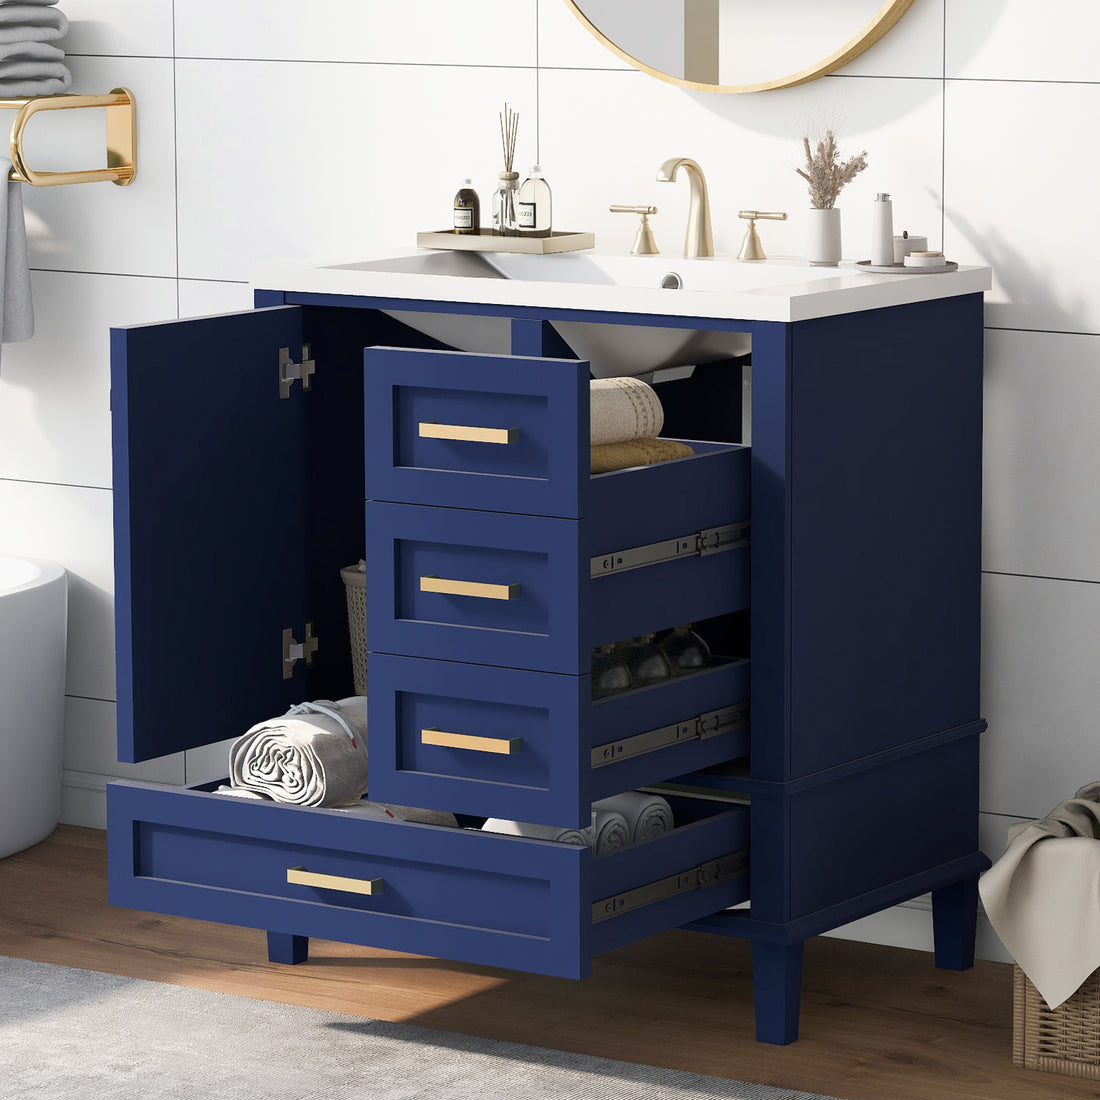 30" Bathroom Vanitymodern Bathroom Cabinet With